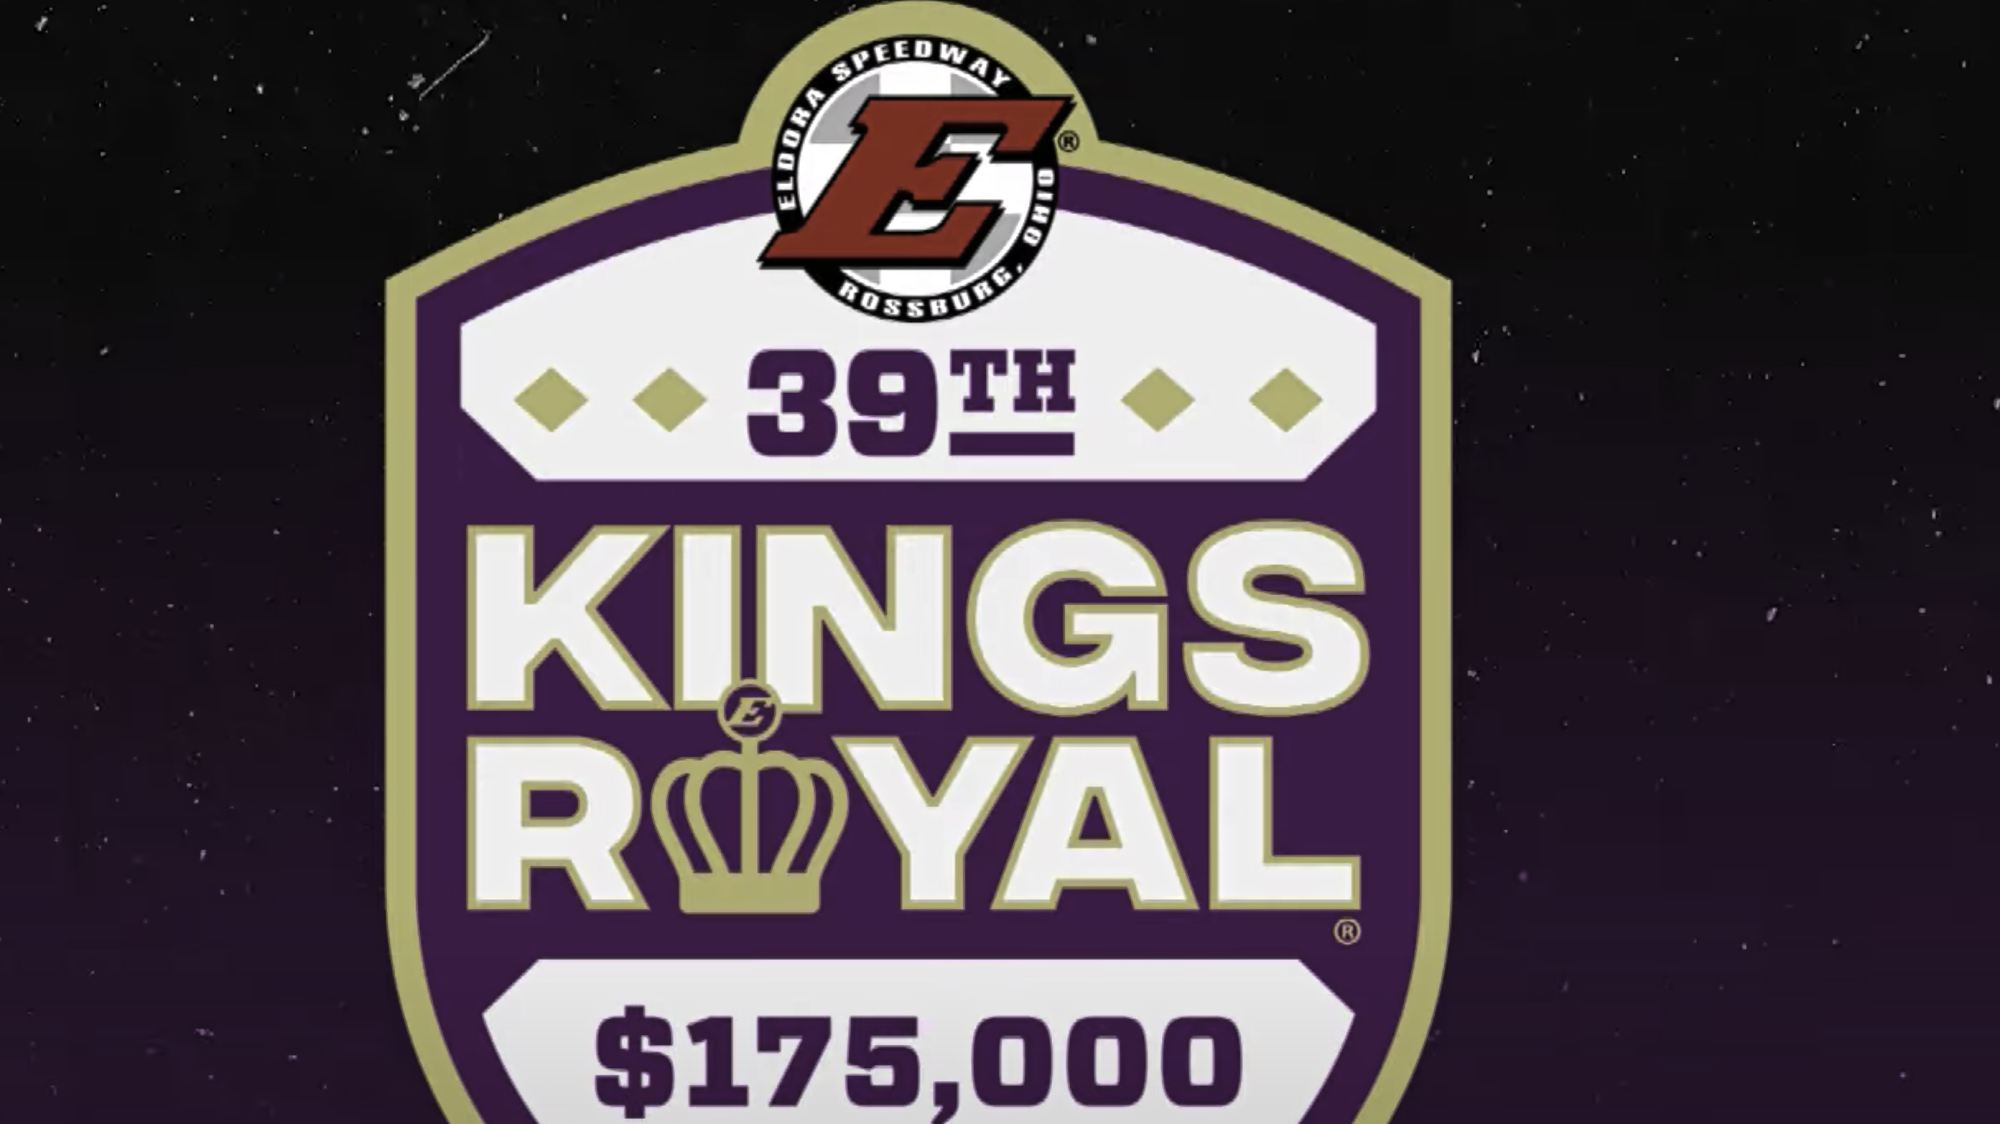 ELDORA'S 'ROYAL SOVEREIGN' AT 39th KINGS ROYAL Speedway Illustrated News